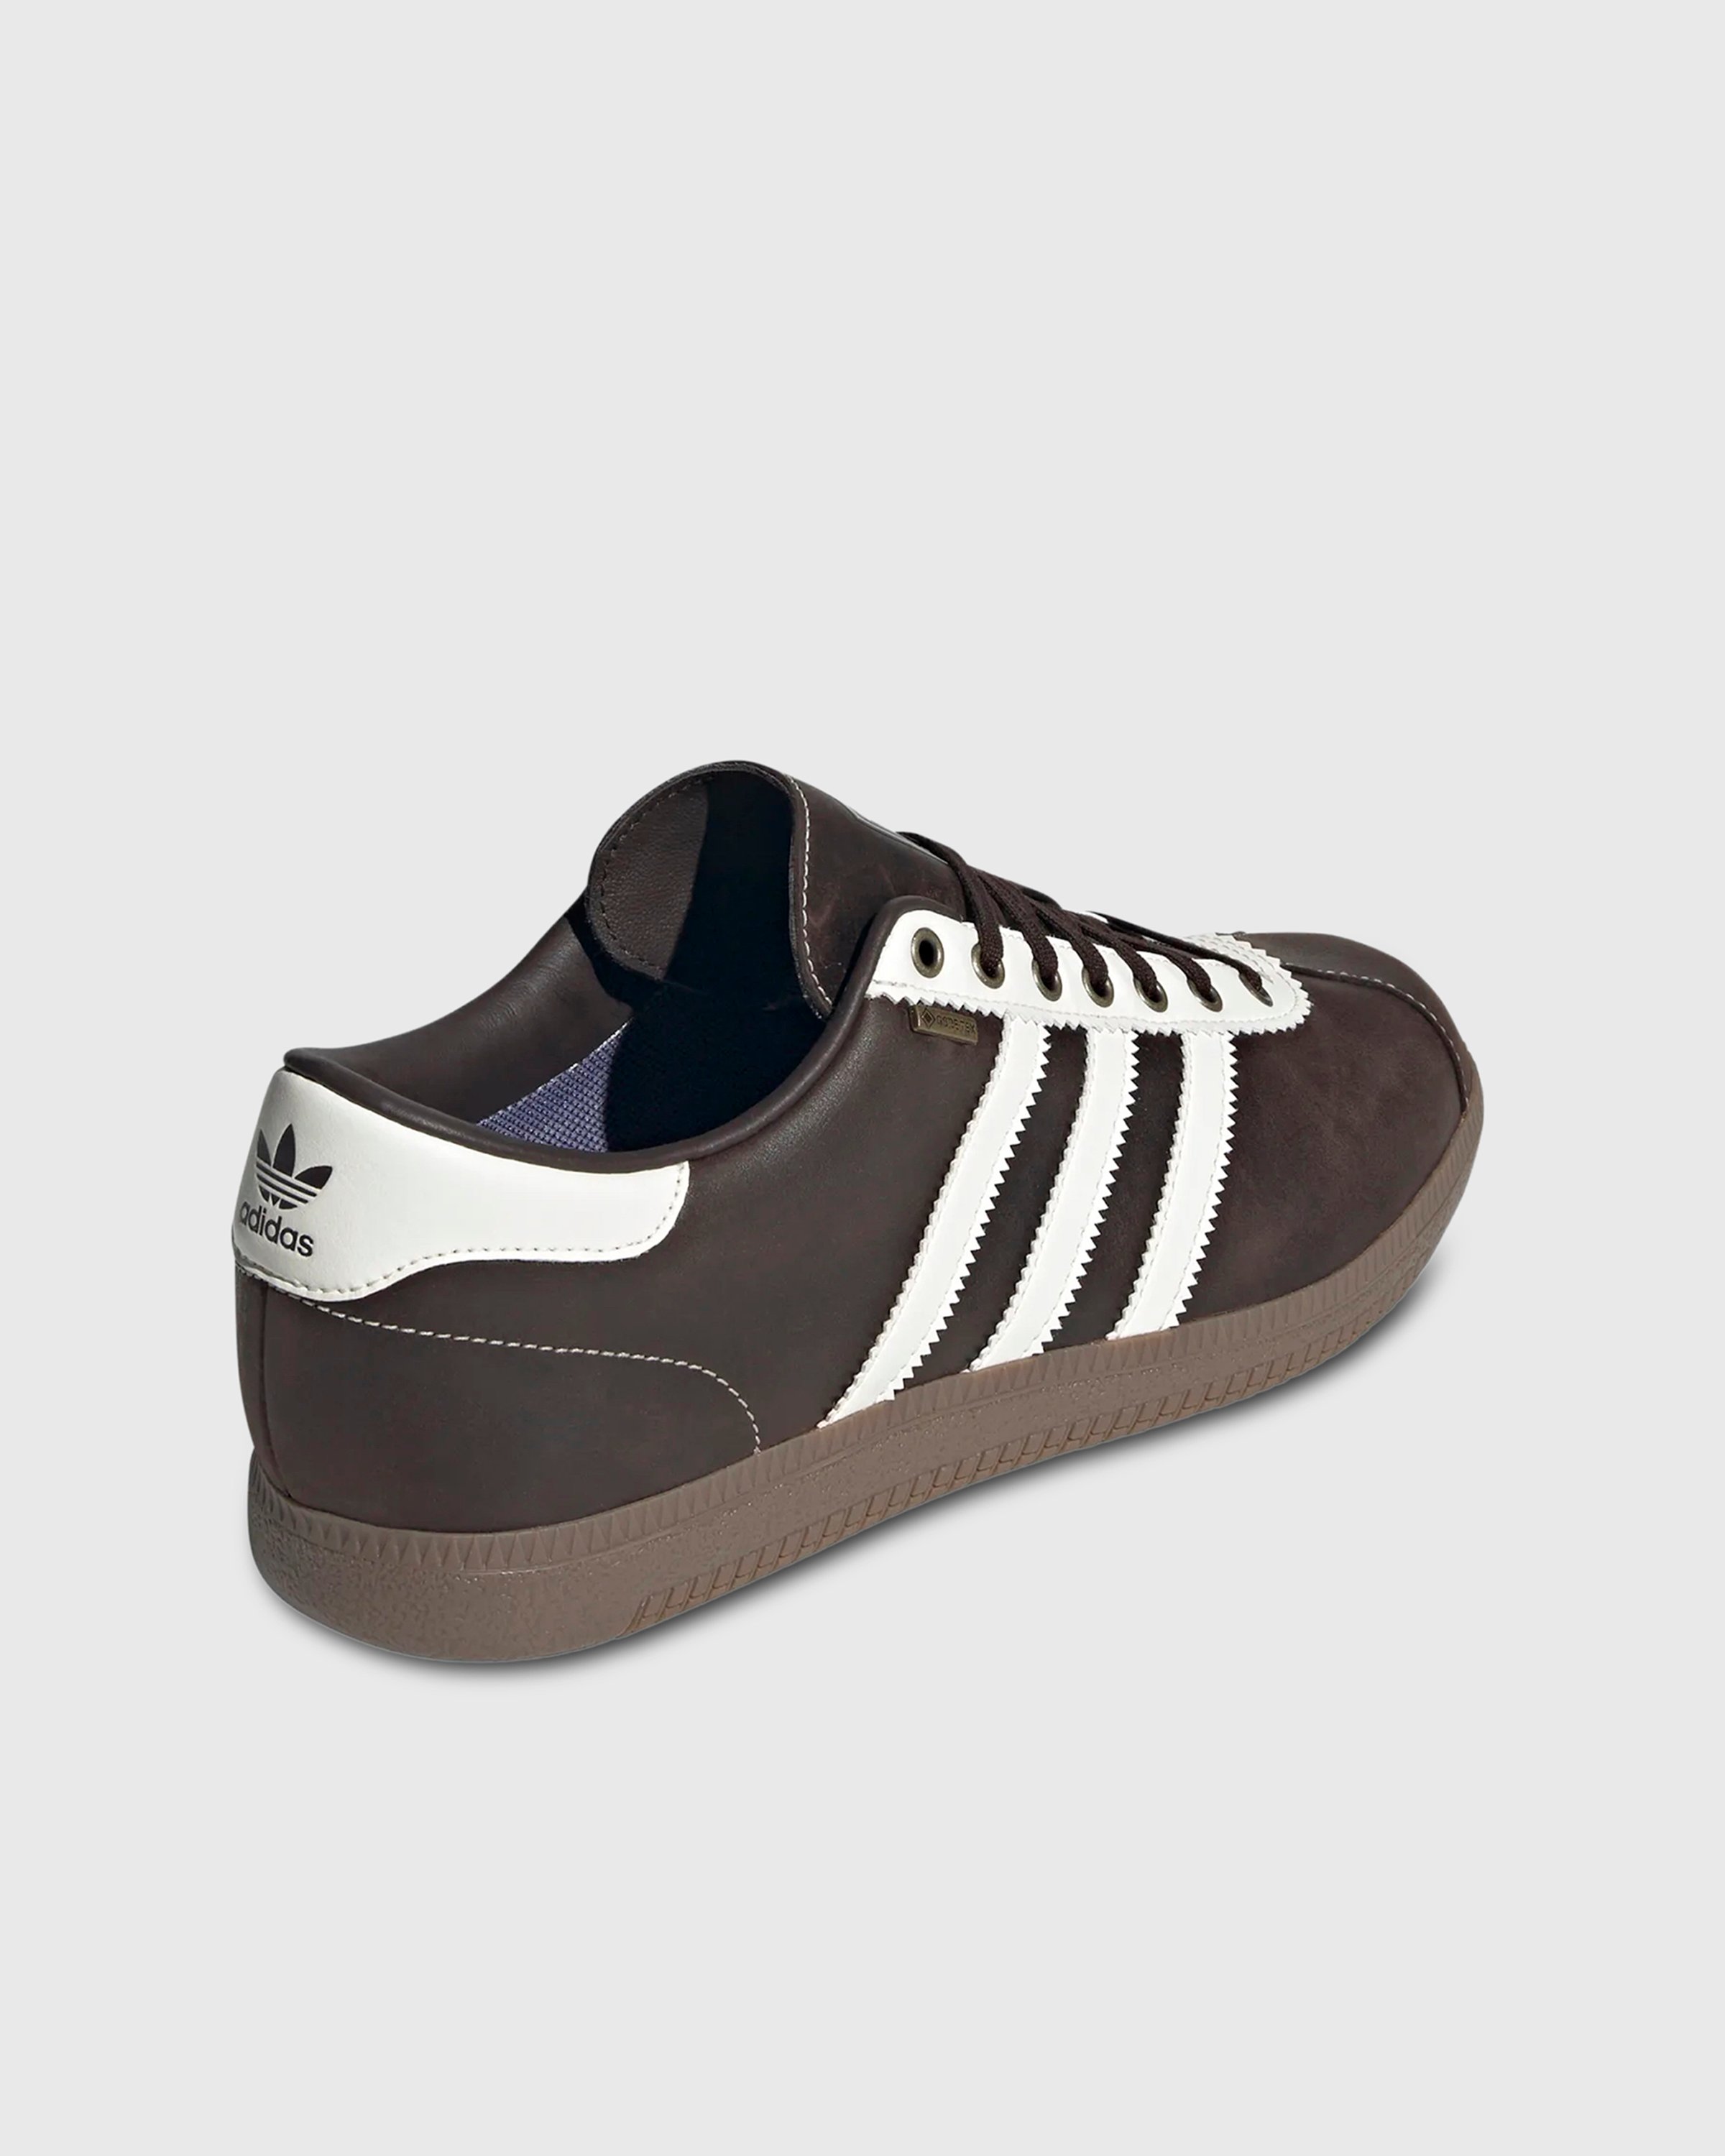 Adidas - BERN GTX            DBROWN/CREWHT/WONWHI - Footwear - Brown - Image 4